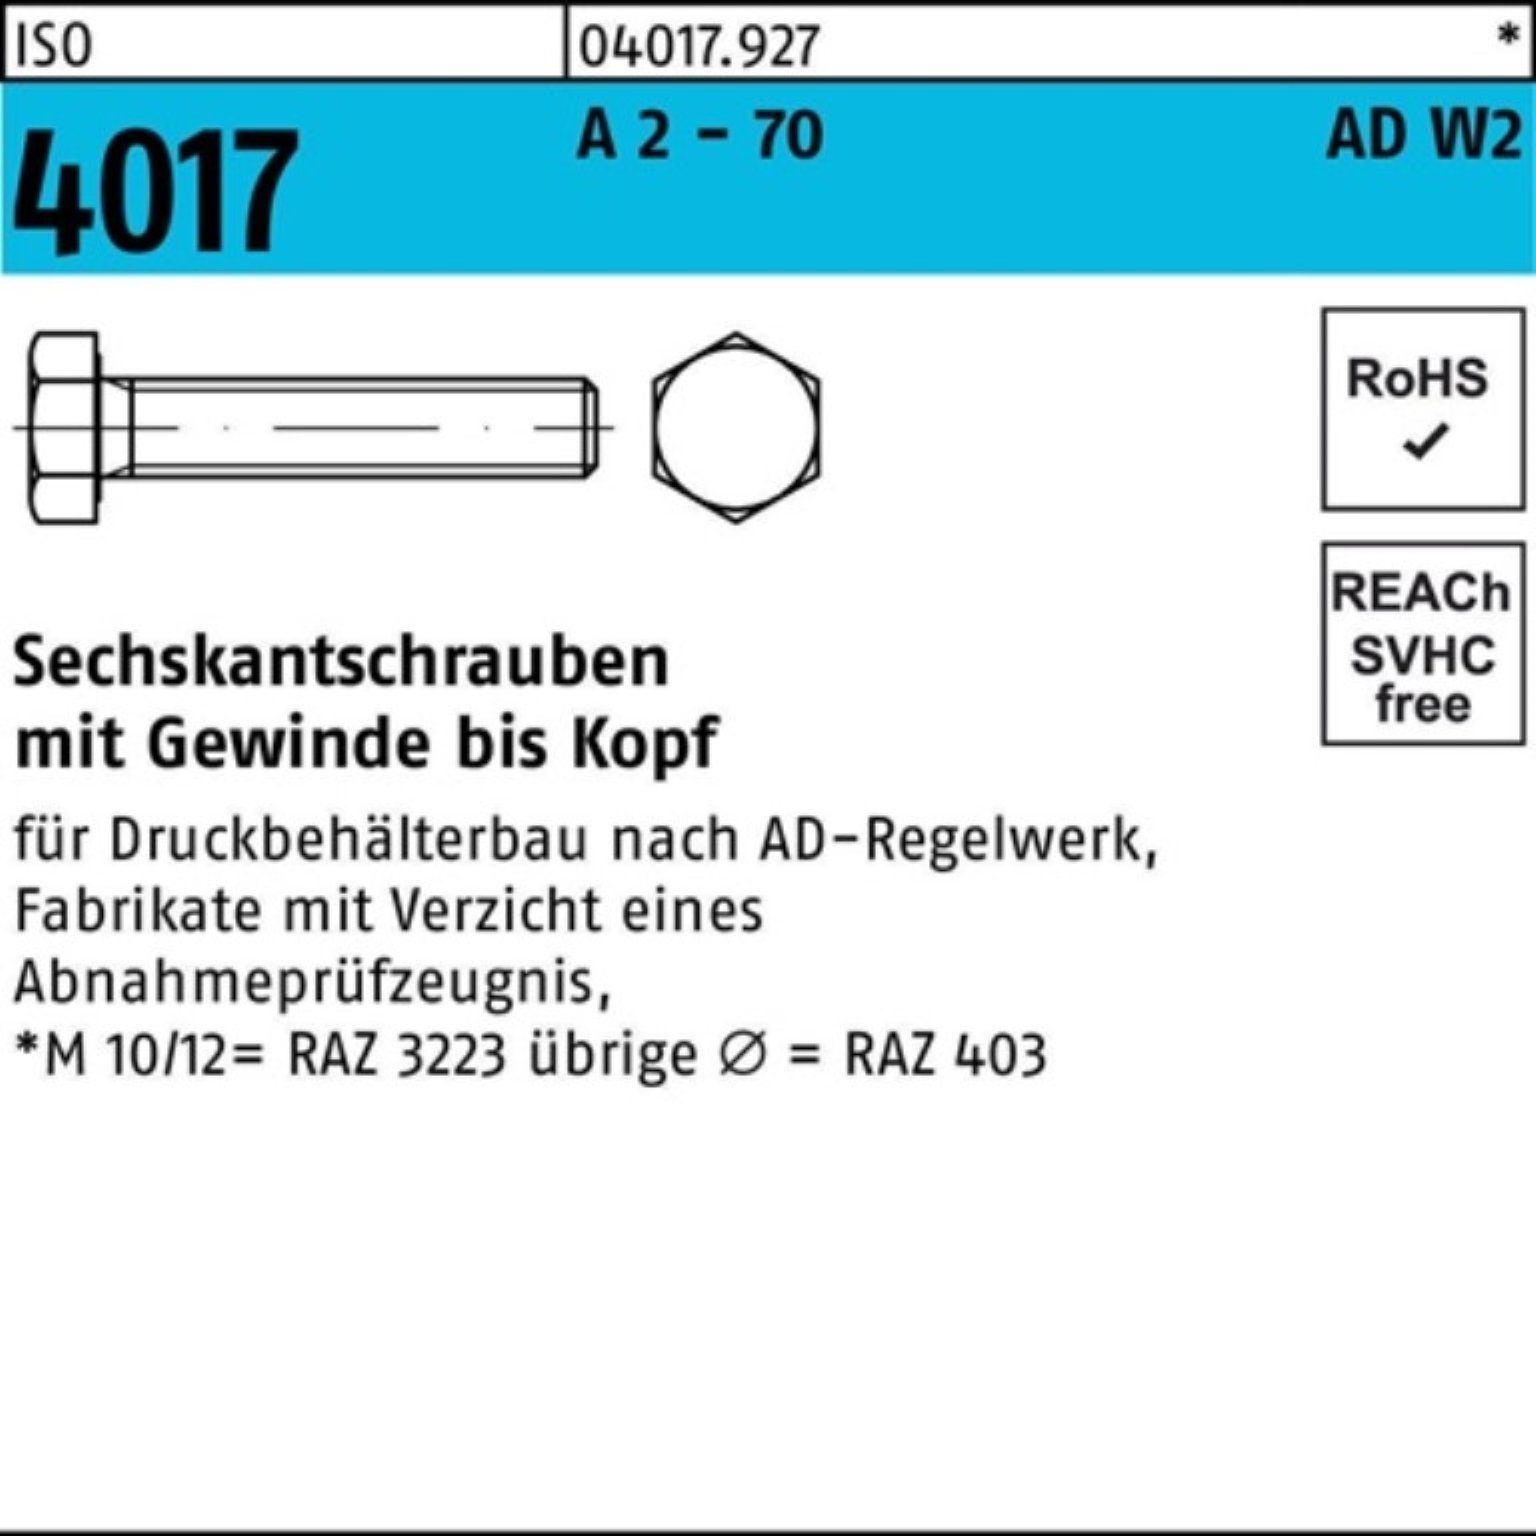 Bufab Sechskantschraube 100er Pack A 4017 VG St ISO 100 - AD-W2 M10x 50 70 Sechskantschraube 2